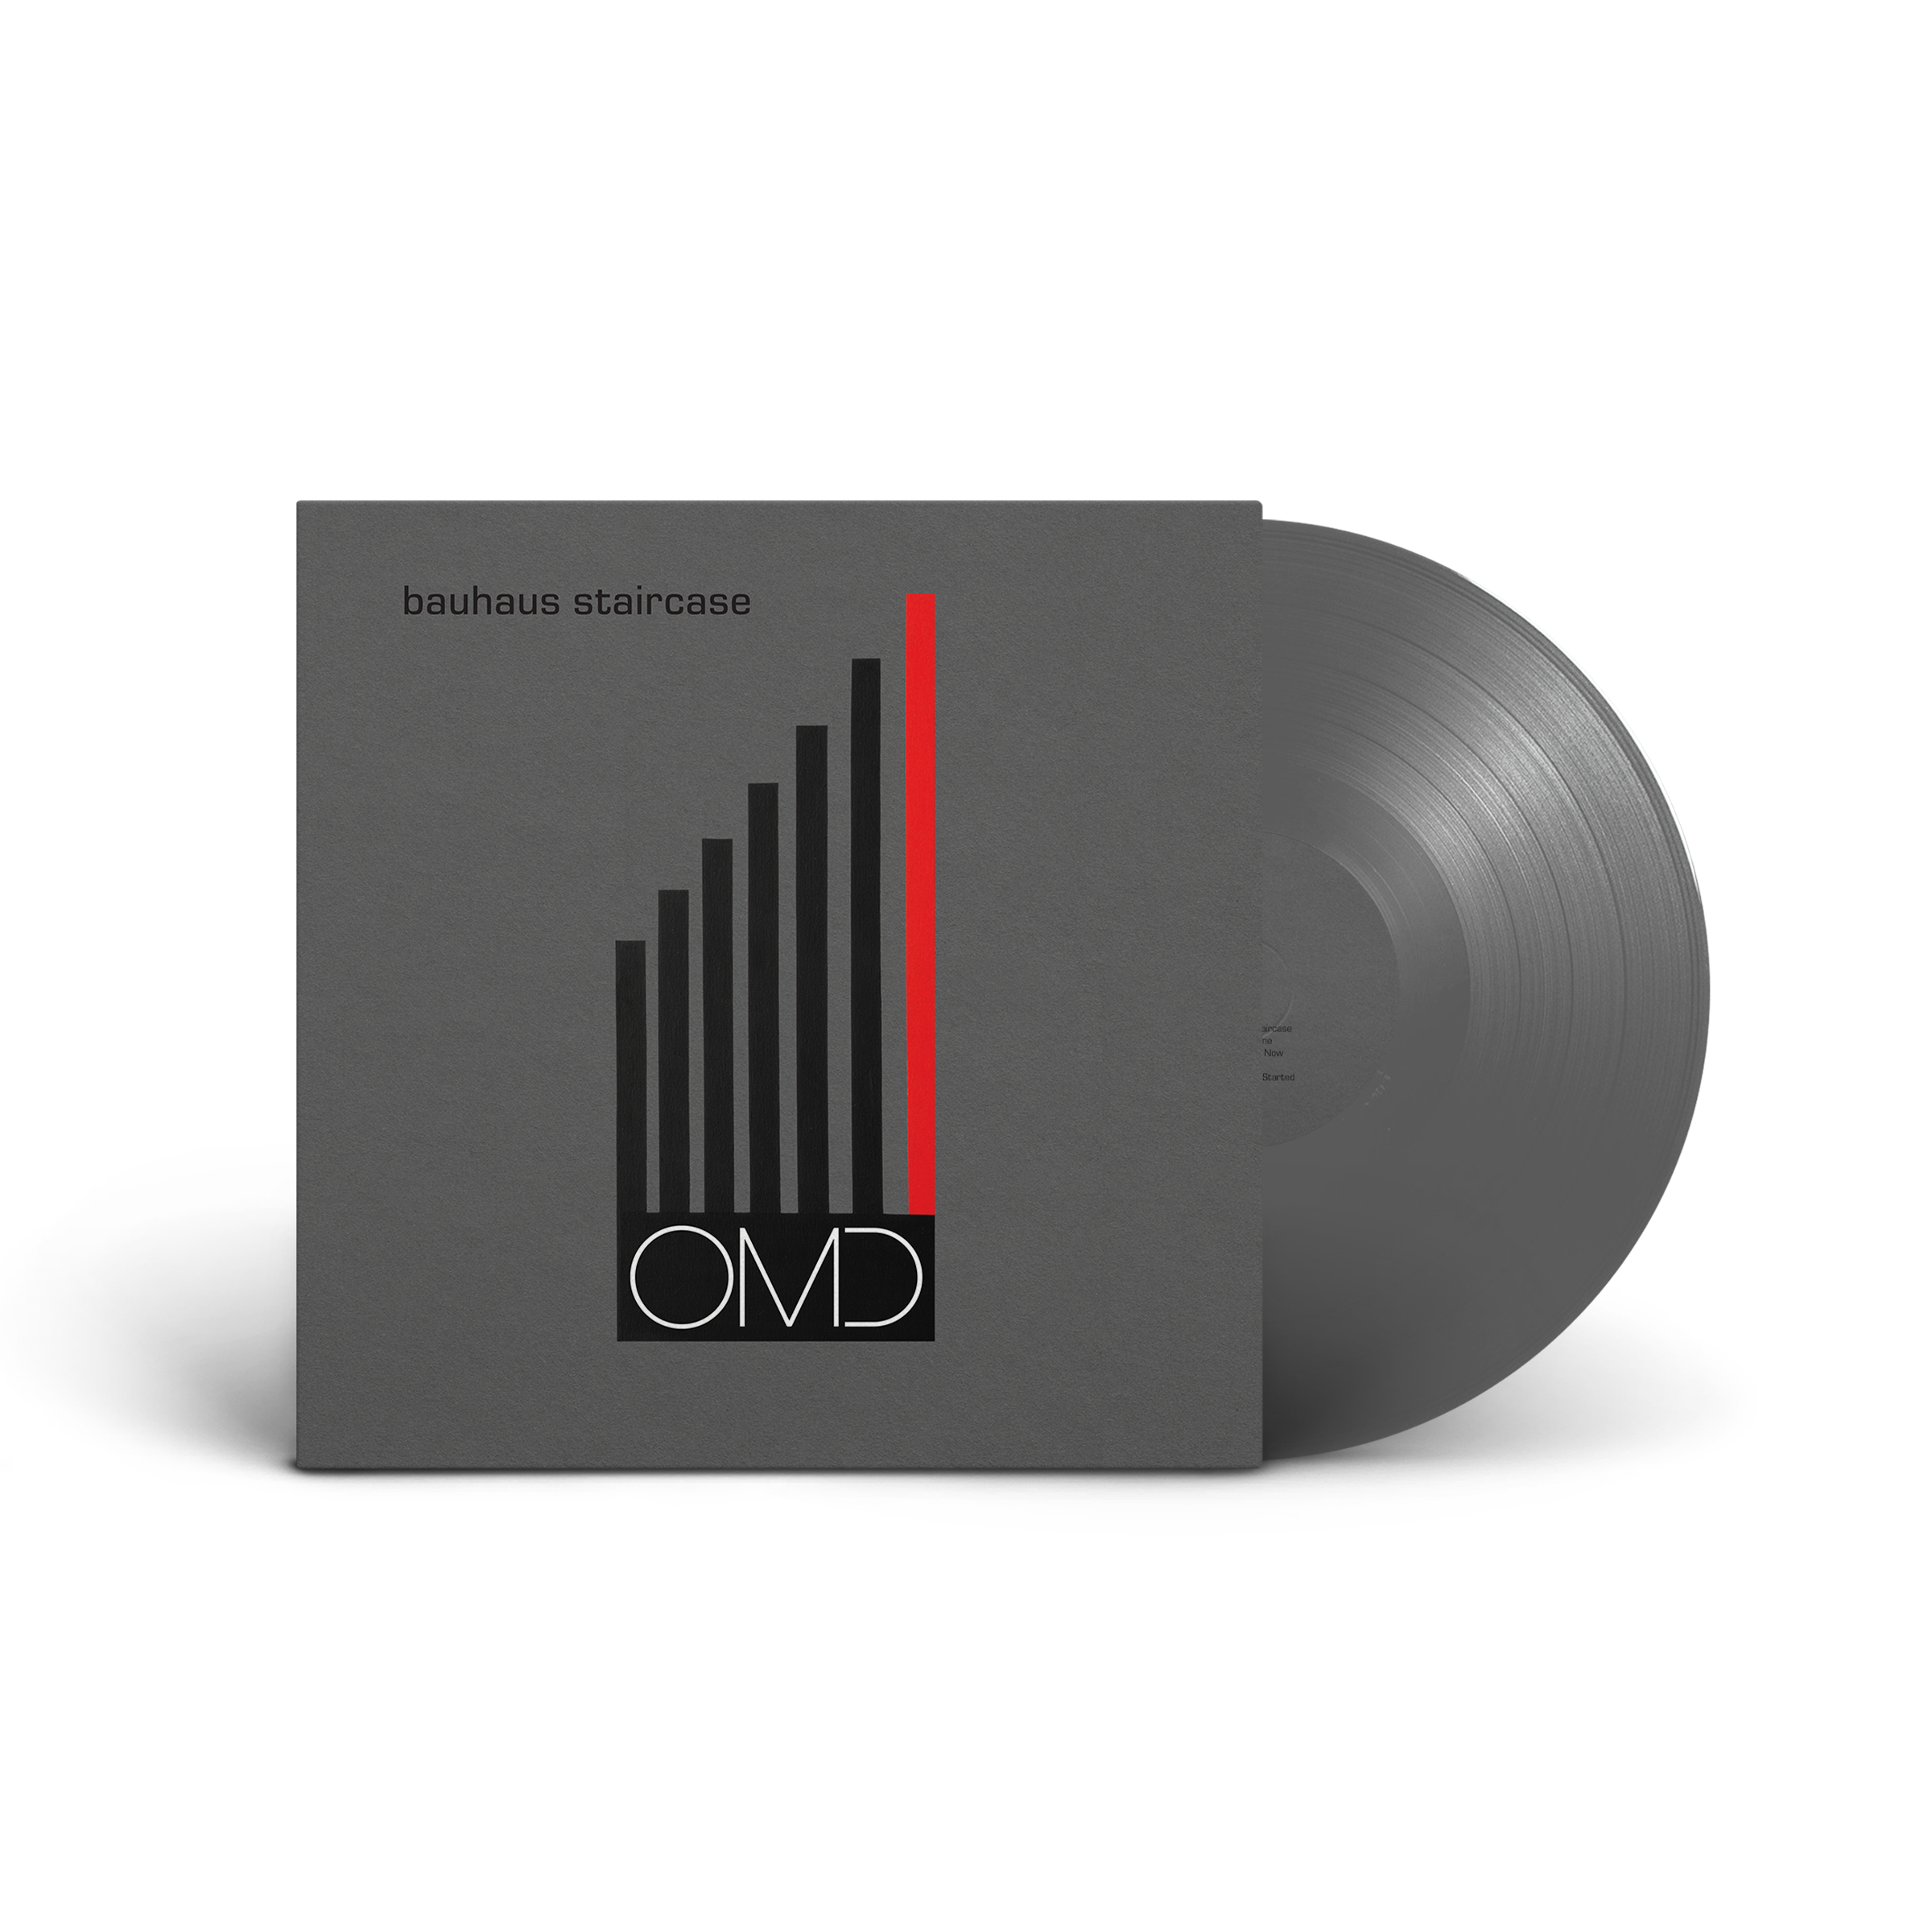 OMD - Bauhaus Staircase: Exclusive Silver Vinyl LP